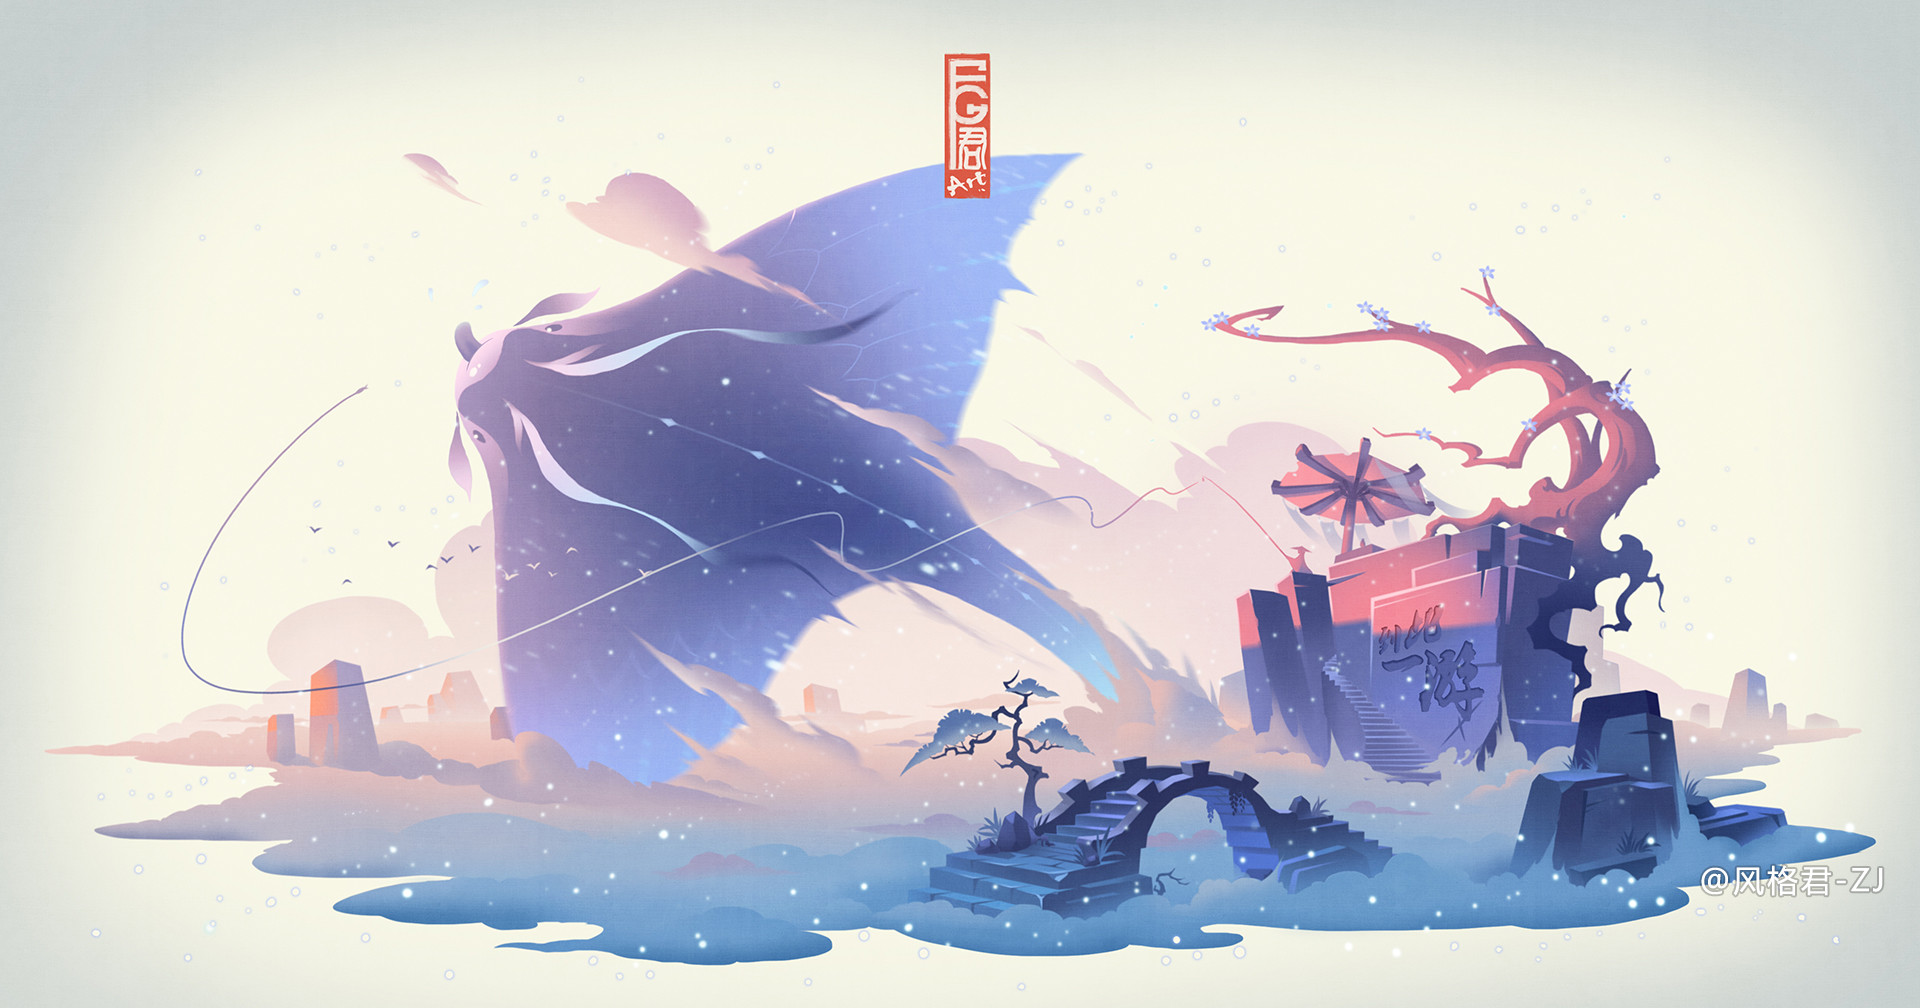 General 1920x1008 Jun Zhang Asian architecture white background fisherman digital art manta rays snow